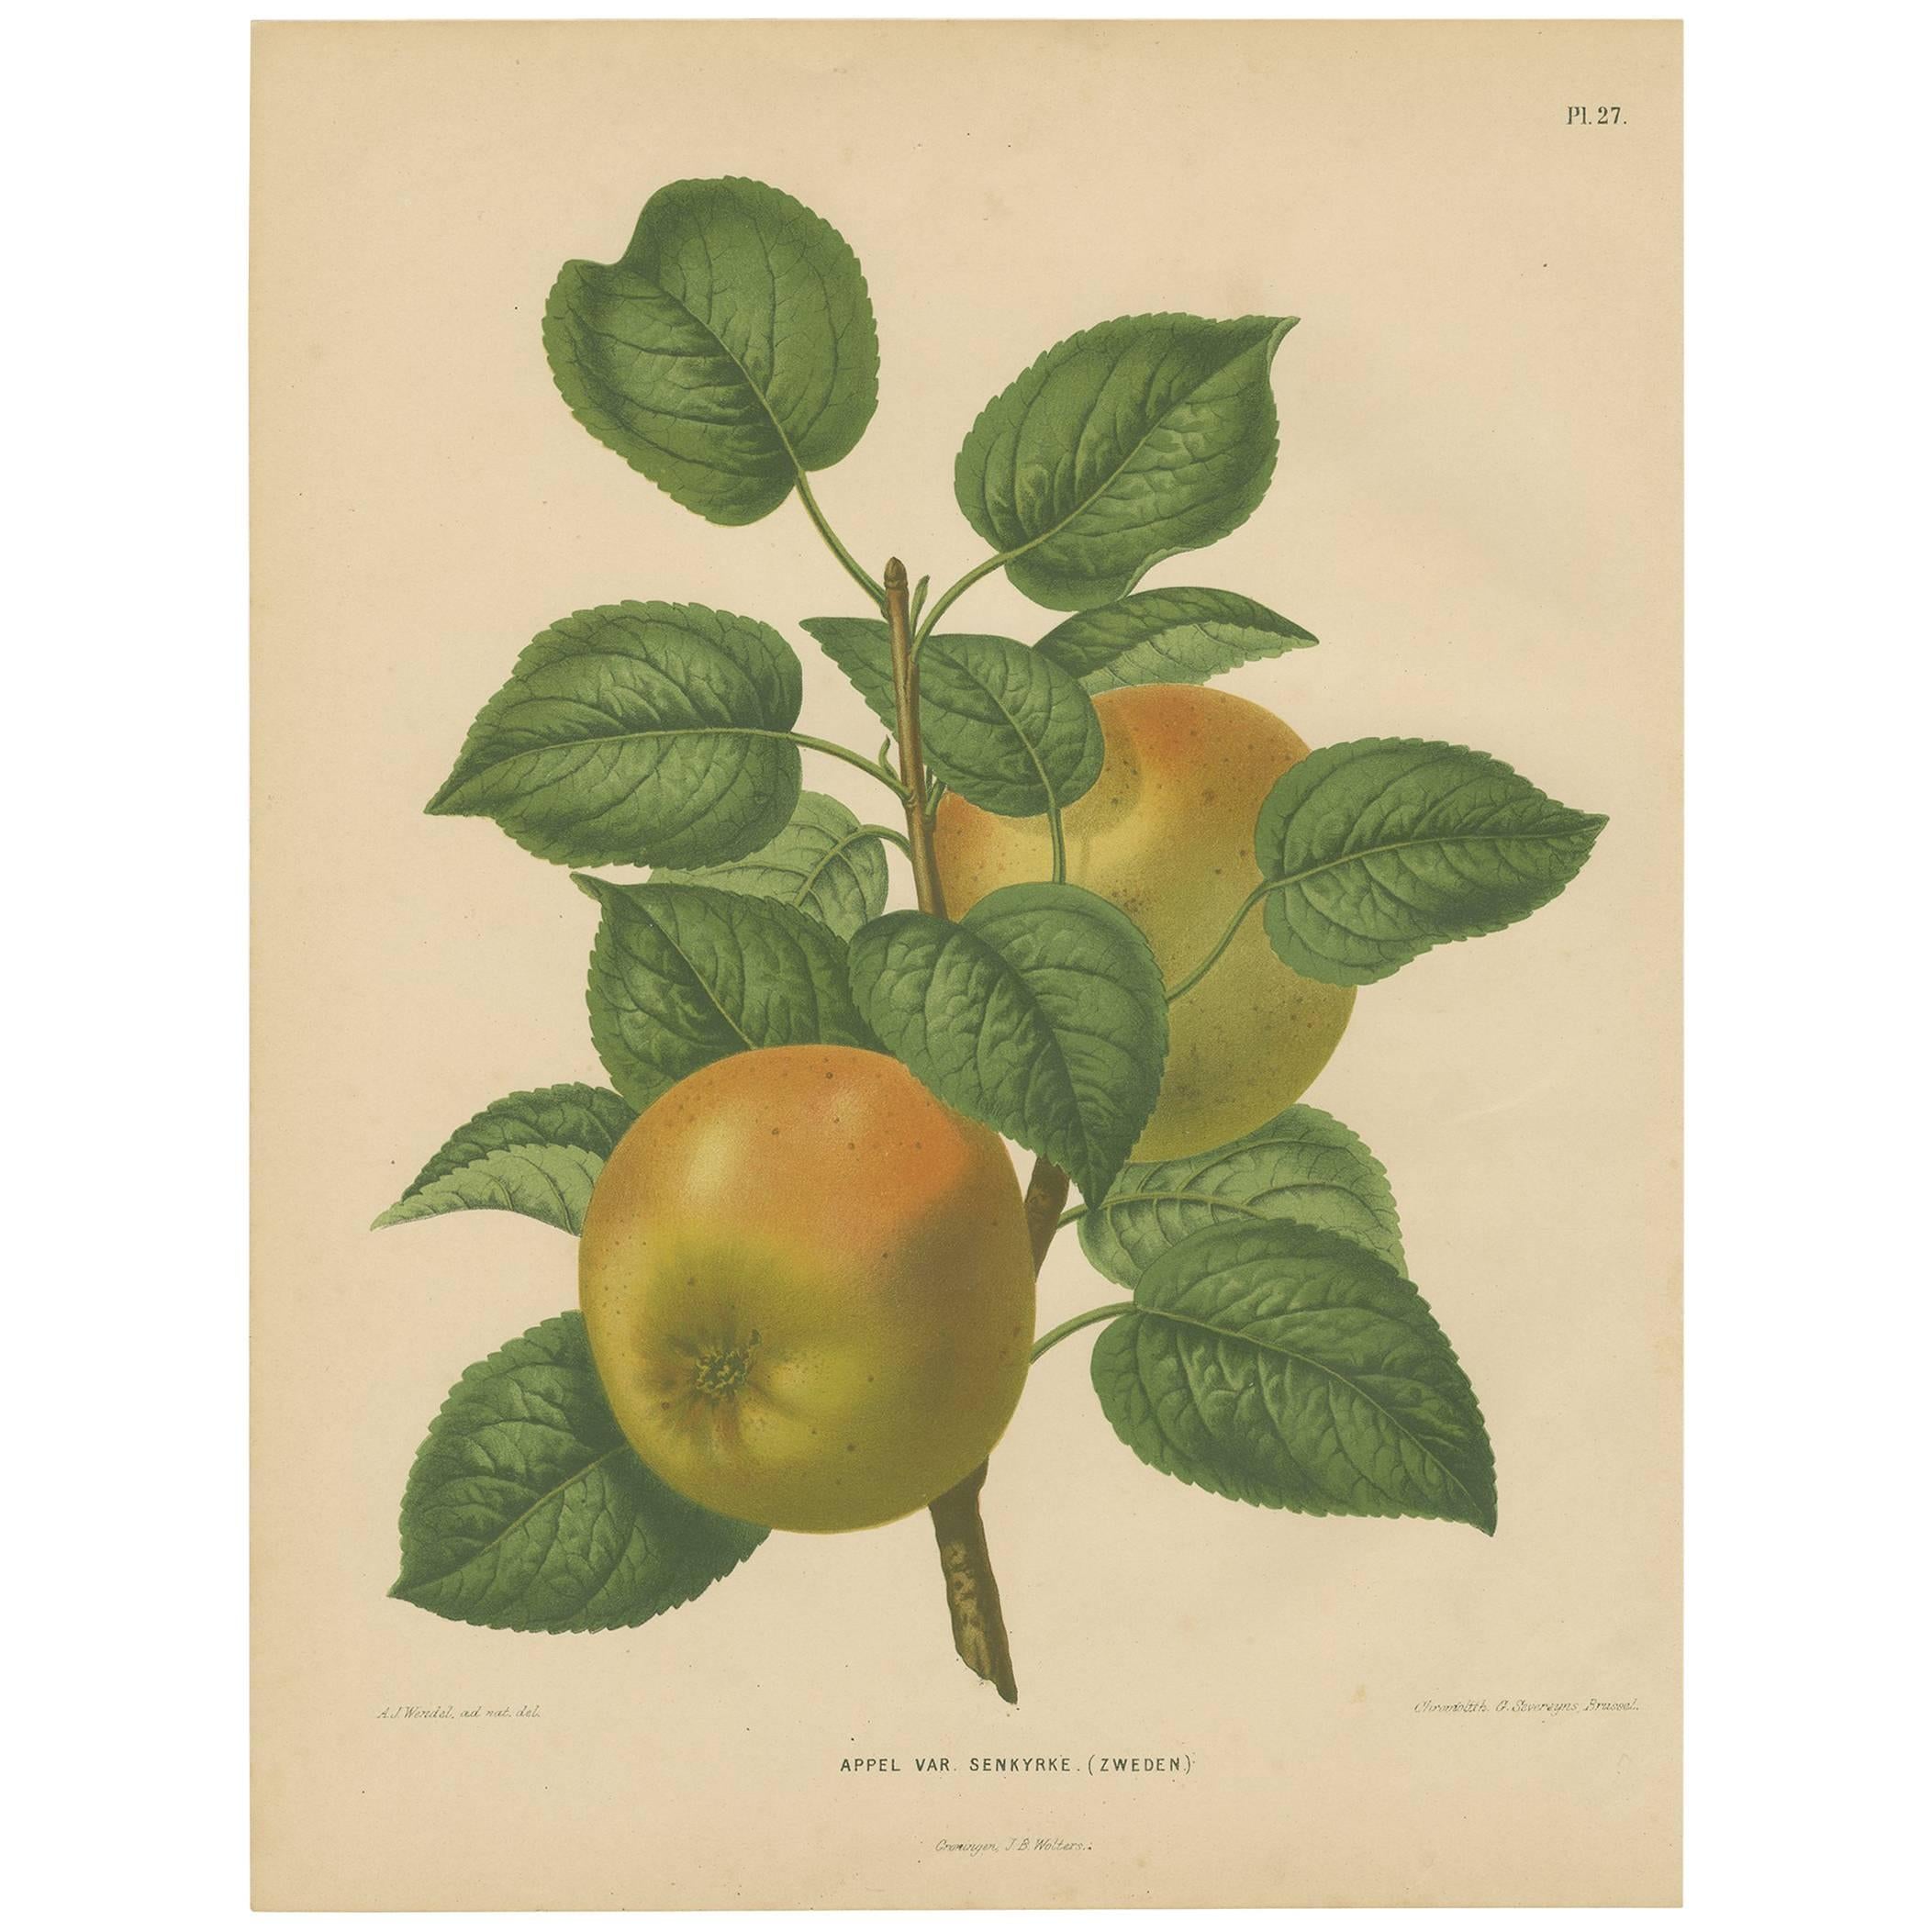 Antique Print of the Senkyrke Apple "Sweden" by G. Severeyns, 1876